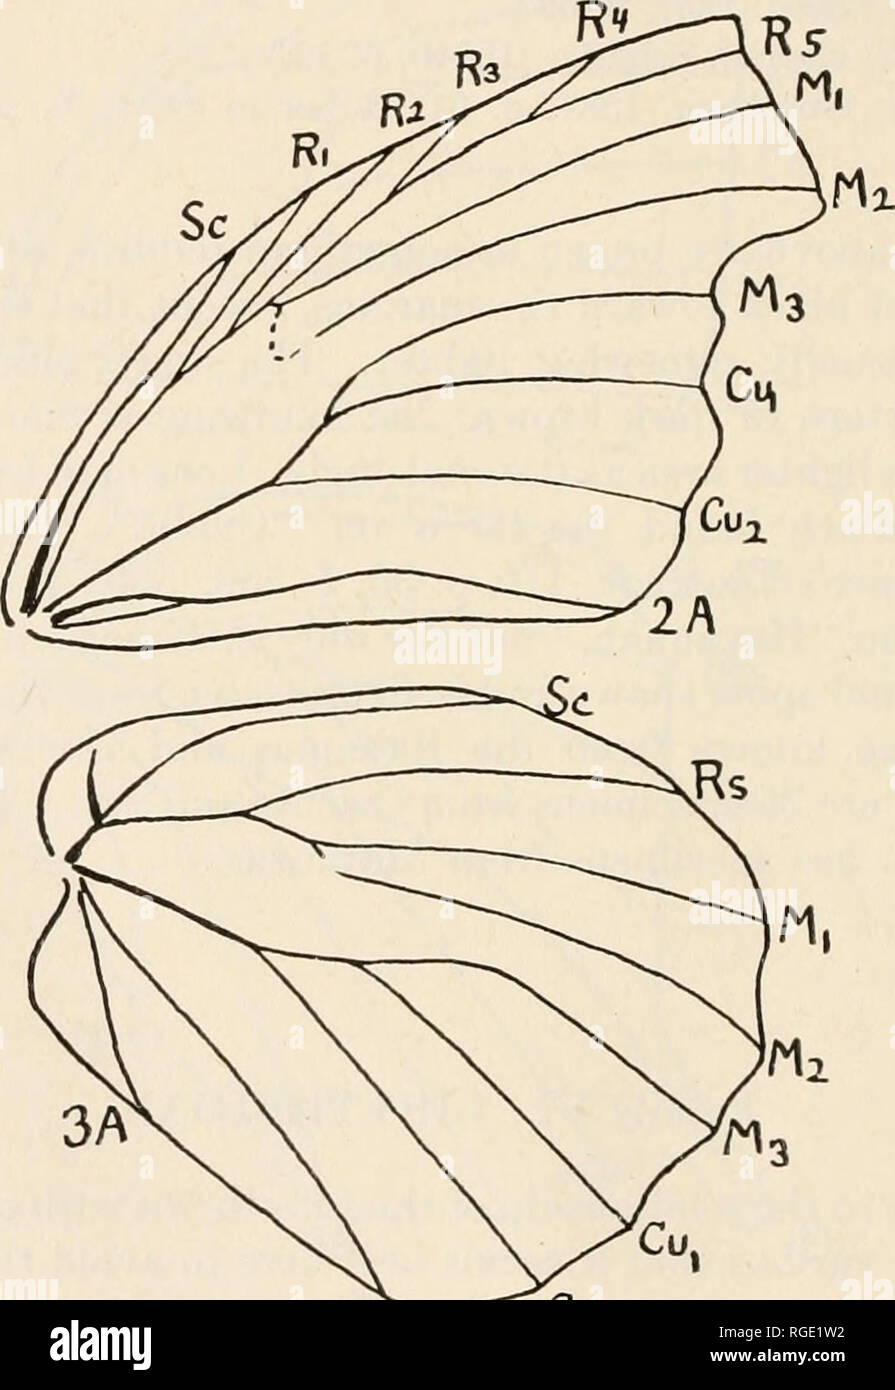 . Bulletin of the Museum of Comparative Zoology at Harvard College. Zoology. 186 bulletin: museum of comparative zoology 93. LiBYTHEA CARINENTA MOTYA Fig. 14, venation. Hecaerge motya Hiibner, Ex. Schm., 2, pi. 137, f. 1, 2 (182-). Libythea motya: Poey, 1847, p. 177. Libythea terena: Herrich-Schaffer, 1864b, p. 163; Gundlach, 1881, p. 70; Kaye, 1926, p. 476. Hypatus carinenta var. motya: Pagenstecher, 1901, p. 15; id., 1911, p. 11. Libythea carinenta motya: Seitz, V, p. 623, pi. 120De (1916); Hering, 1921, p. 285, pi. 2, f. 3.. 2A ^^2. Fig. 14. Libythea carinenta motya, venation. The forewing  Stock Photo